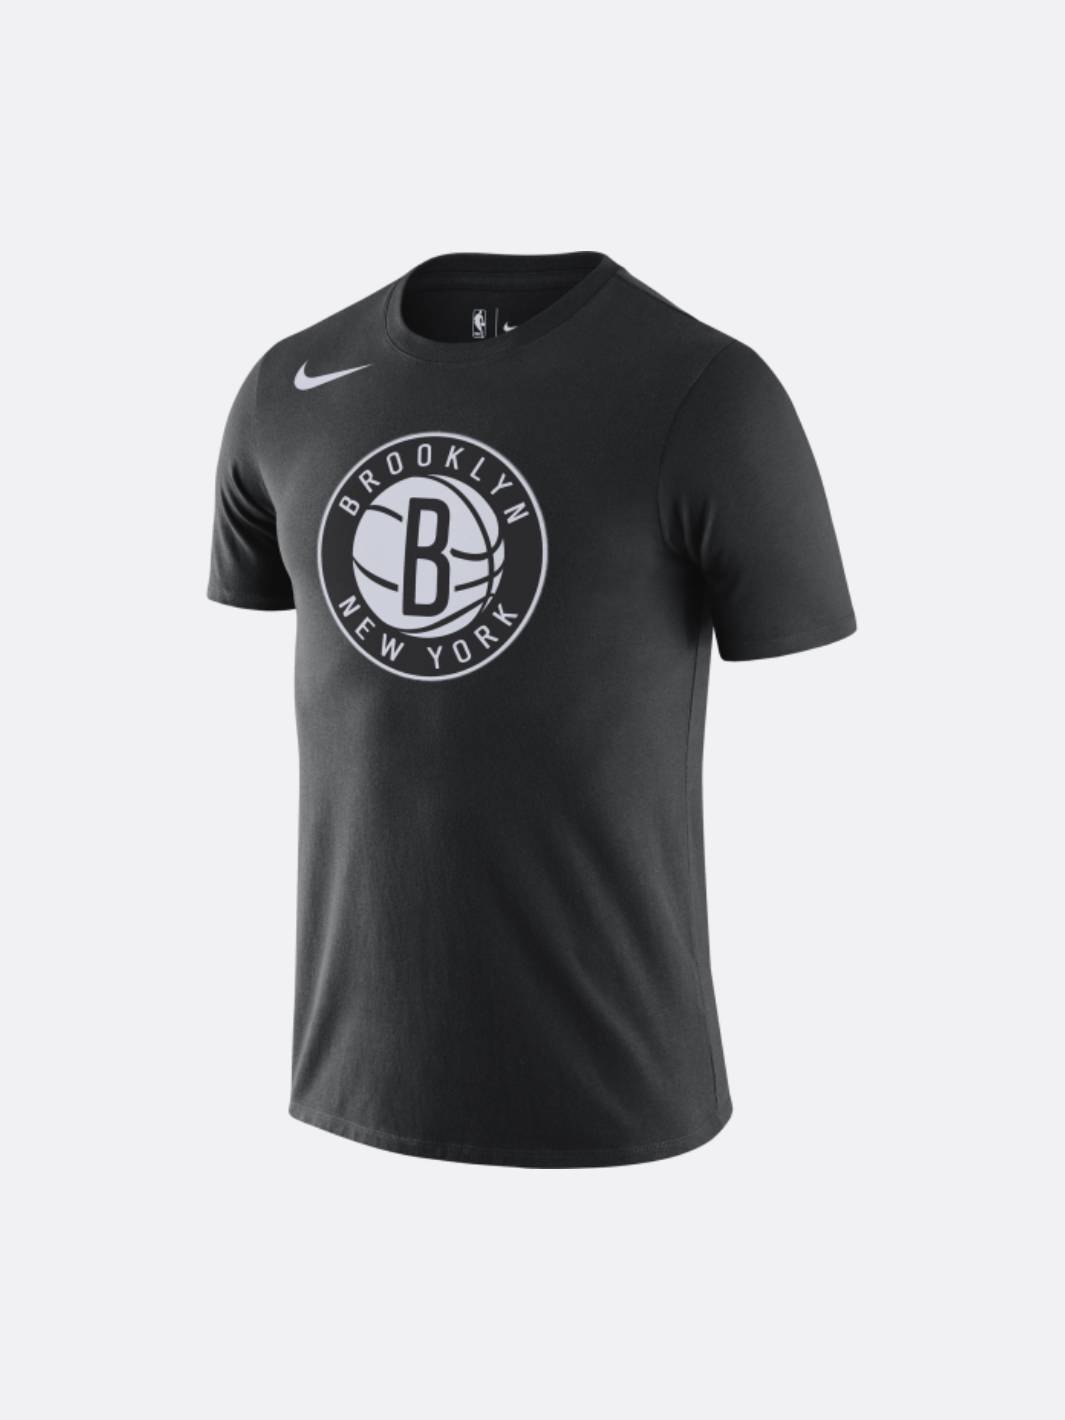 New York Knicks Nike Dri-Fit Polo Men's Black Used